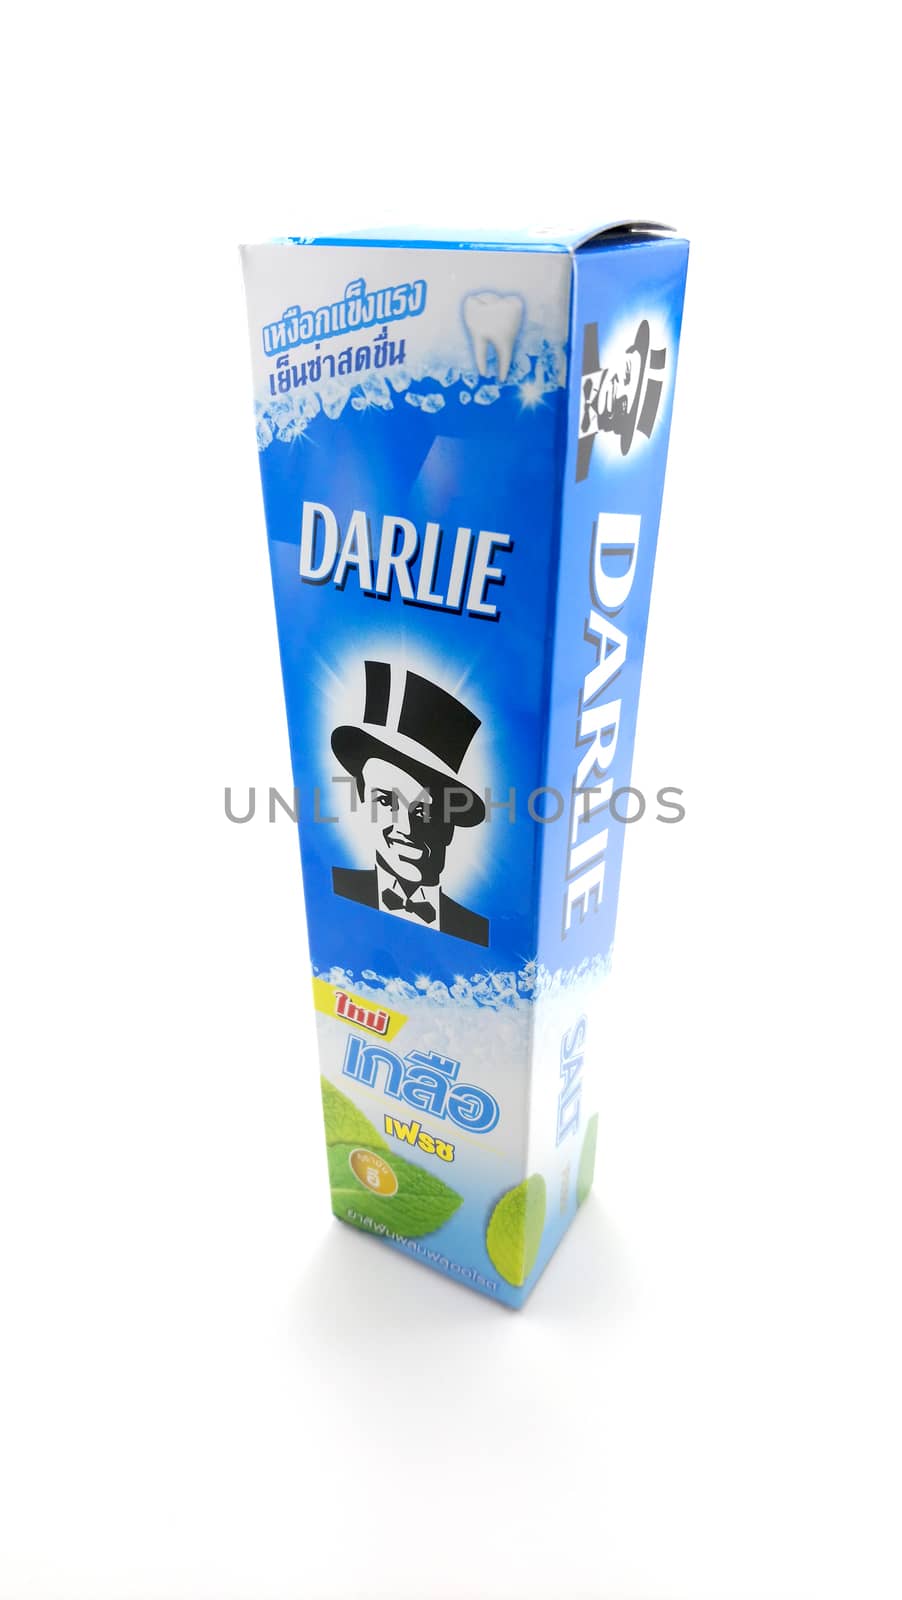 Darlie salt toothpaste in Manila, Philippines by imwaltersy